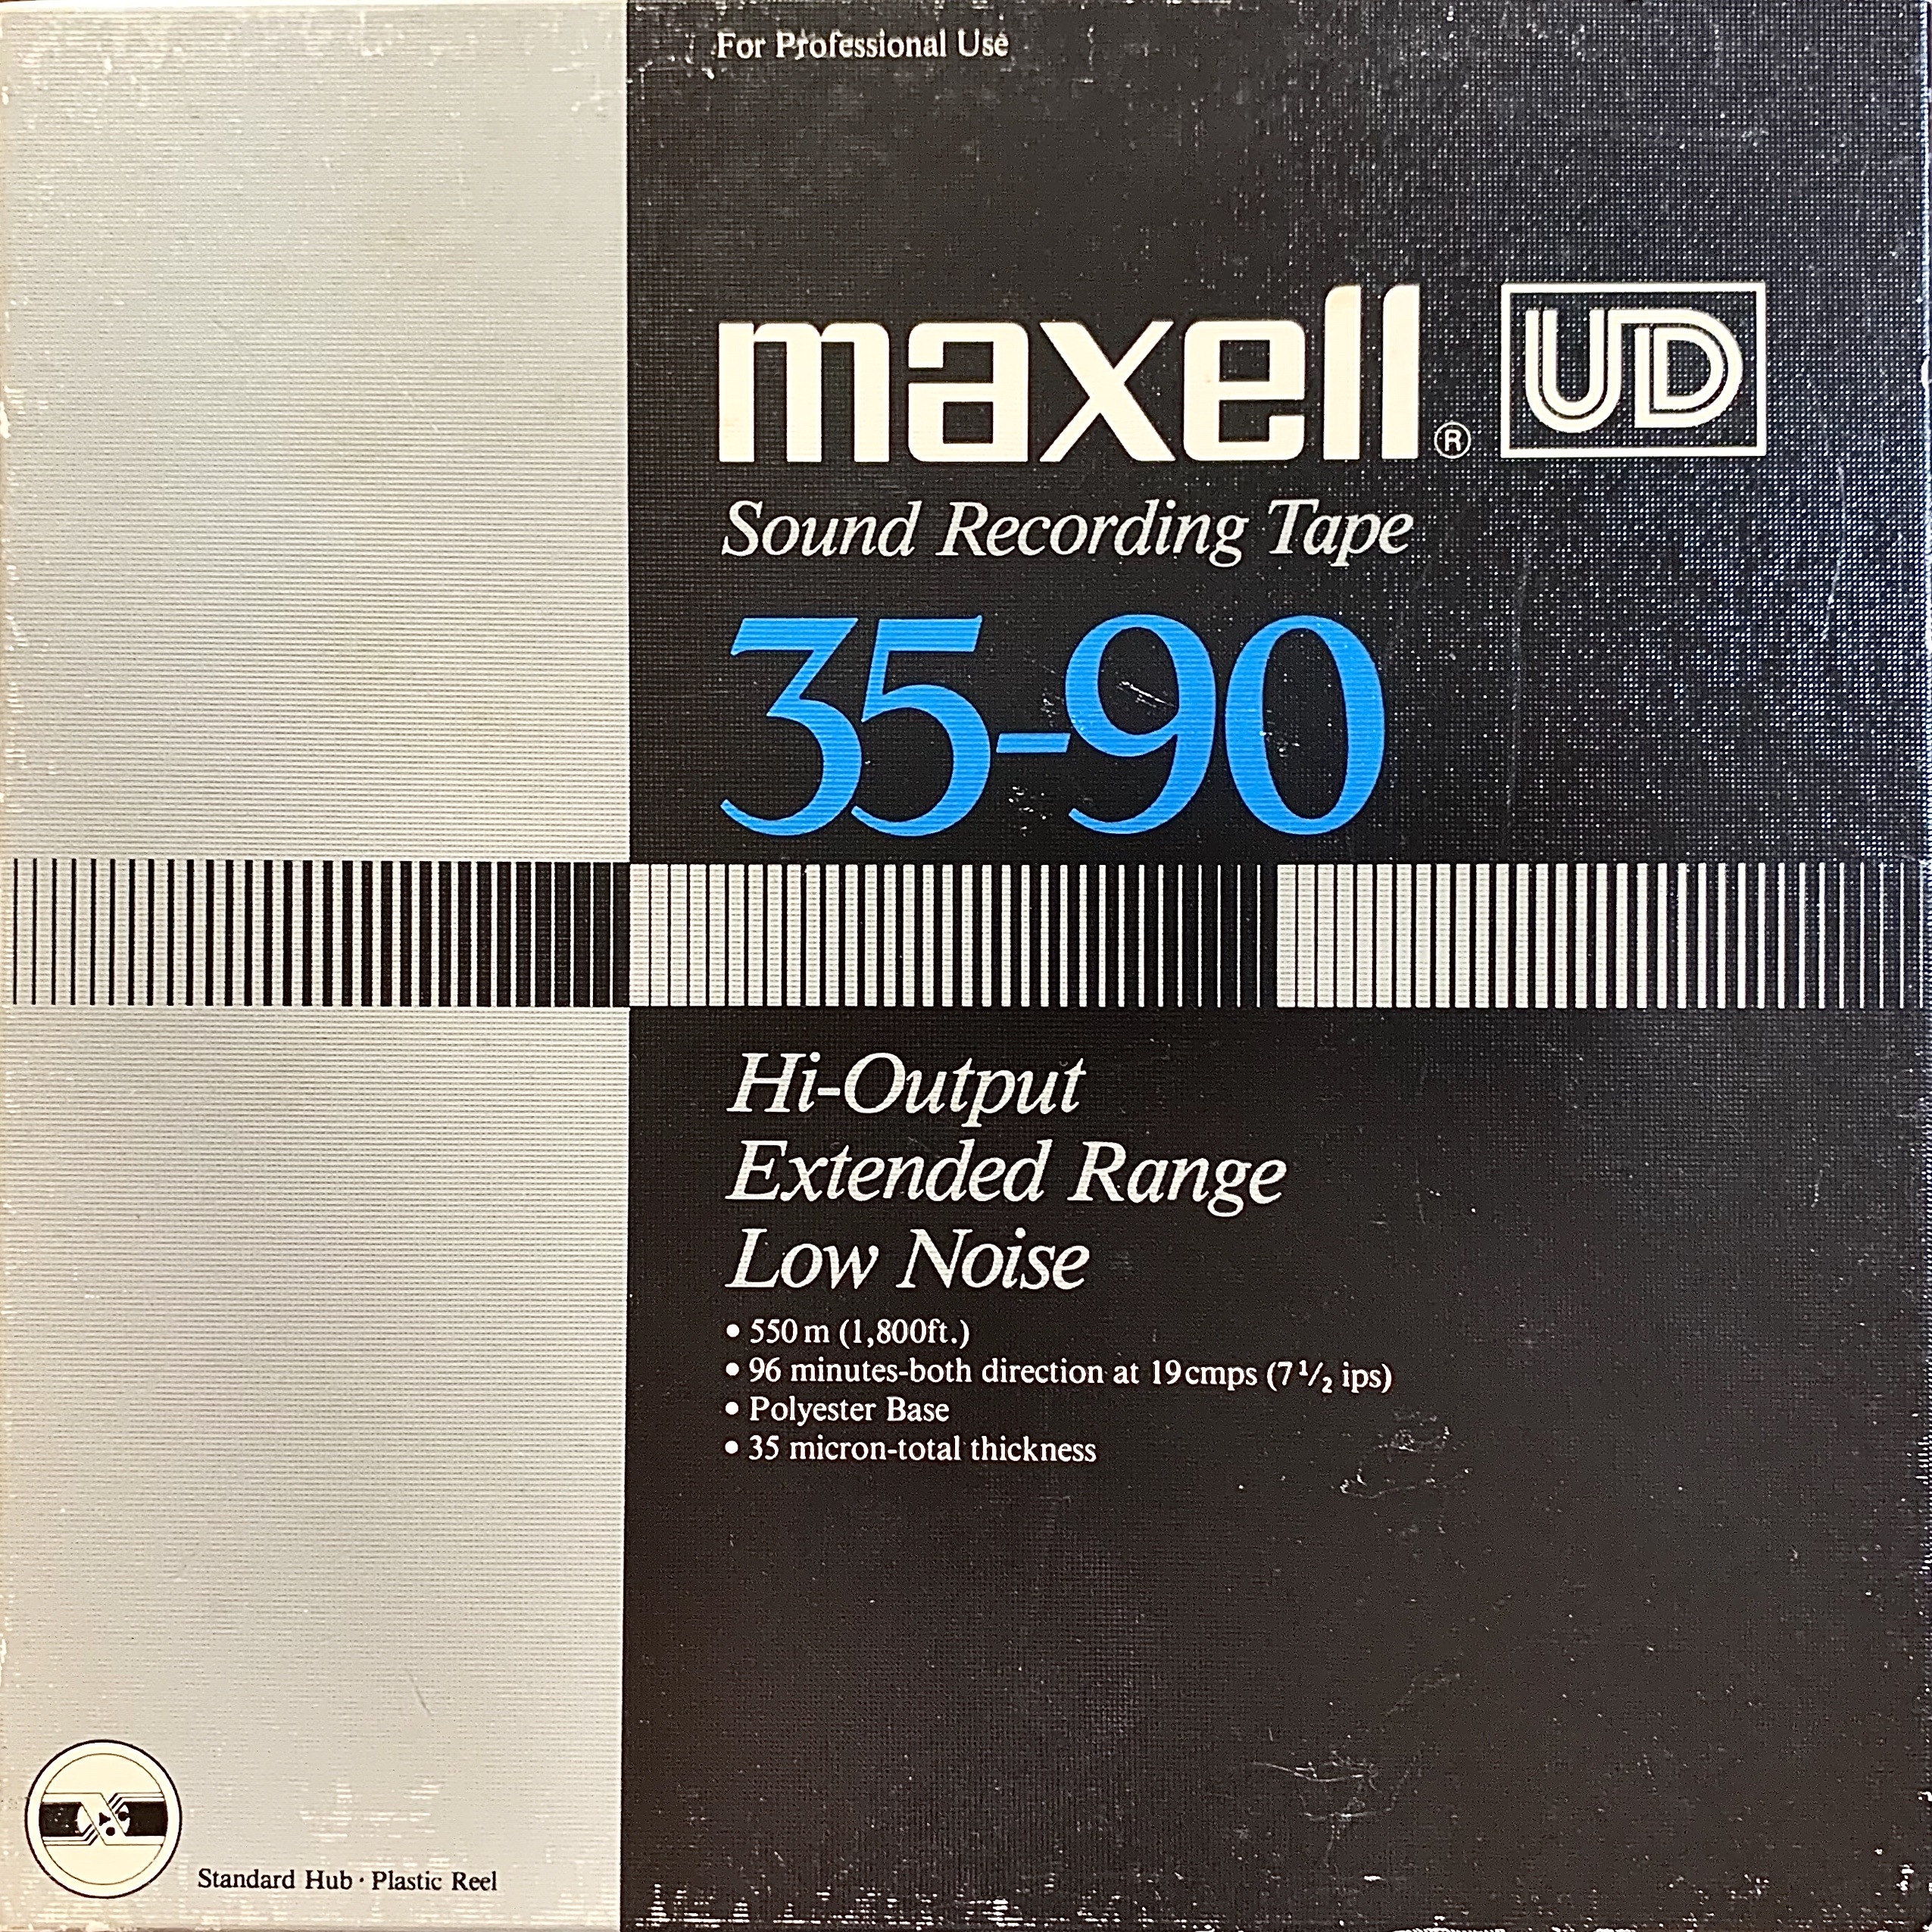 https://reeltoreelwarehouse.com/wp-content/uploads/2020/09/Maxell-UD-35-90-Reel-Tape-Box-1980s.jpg